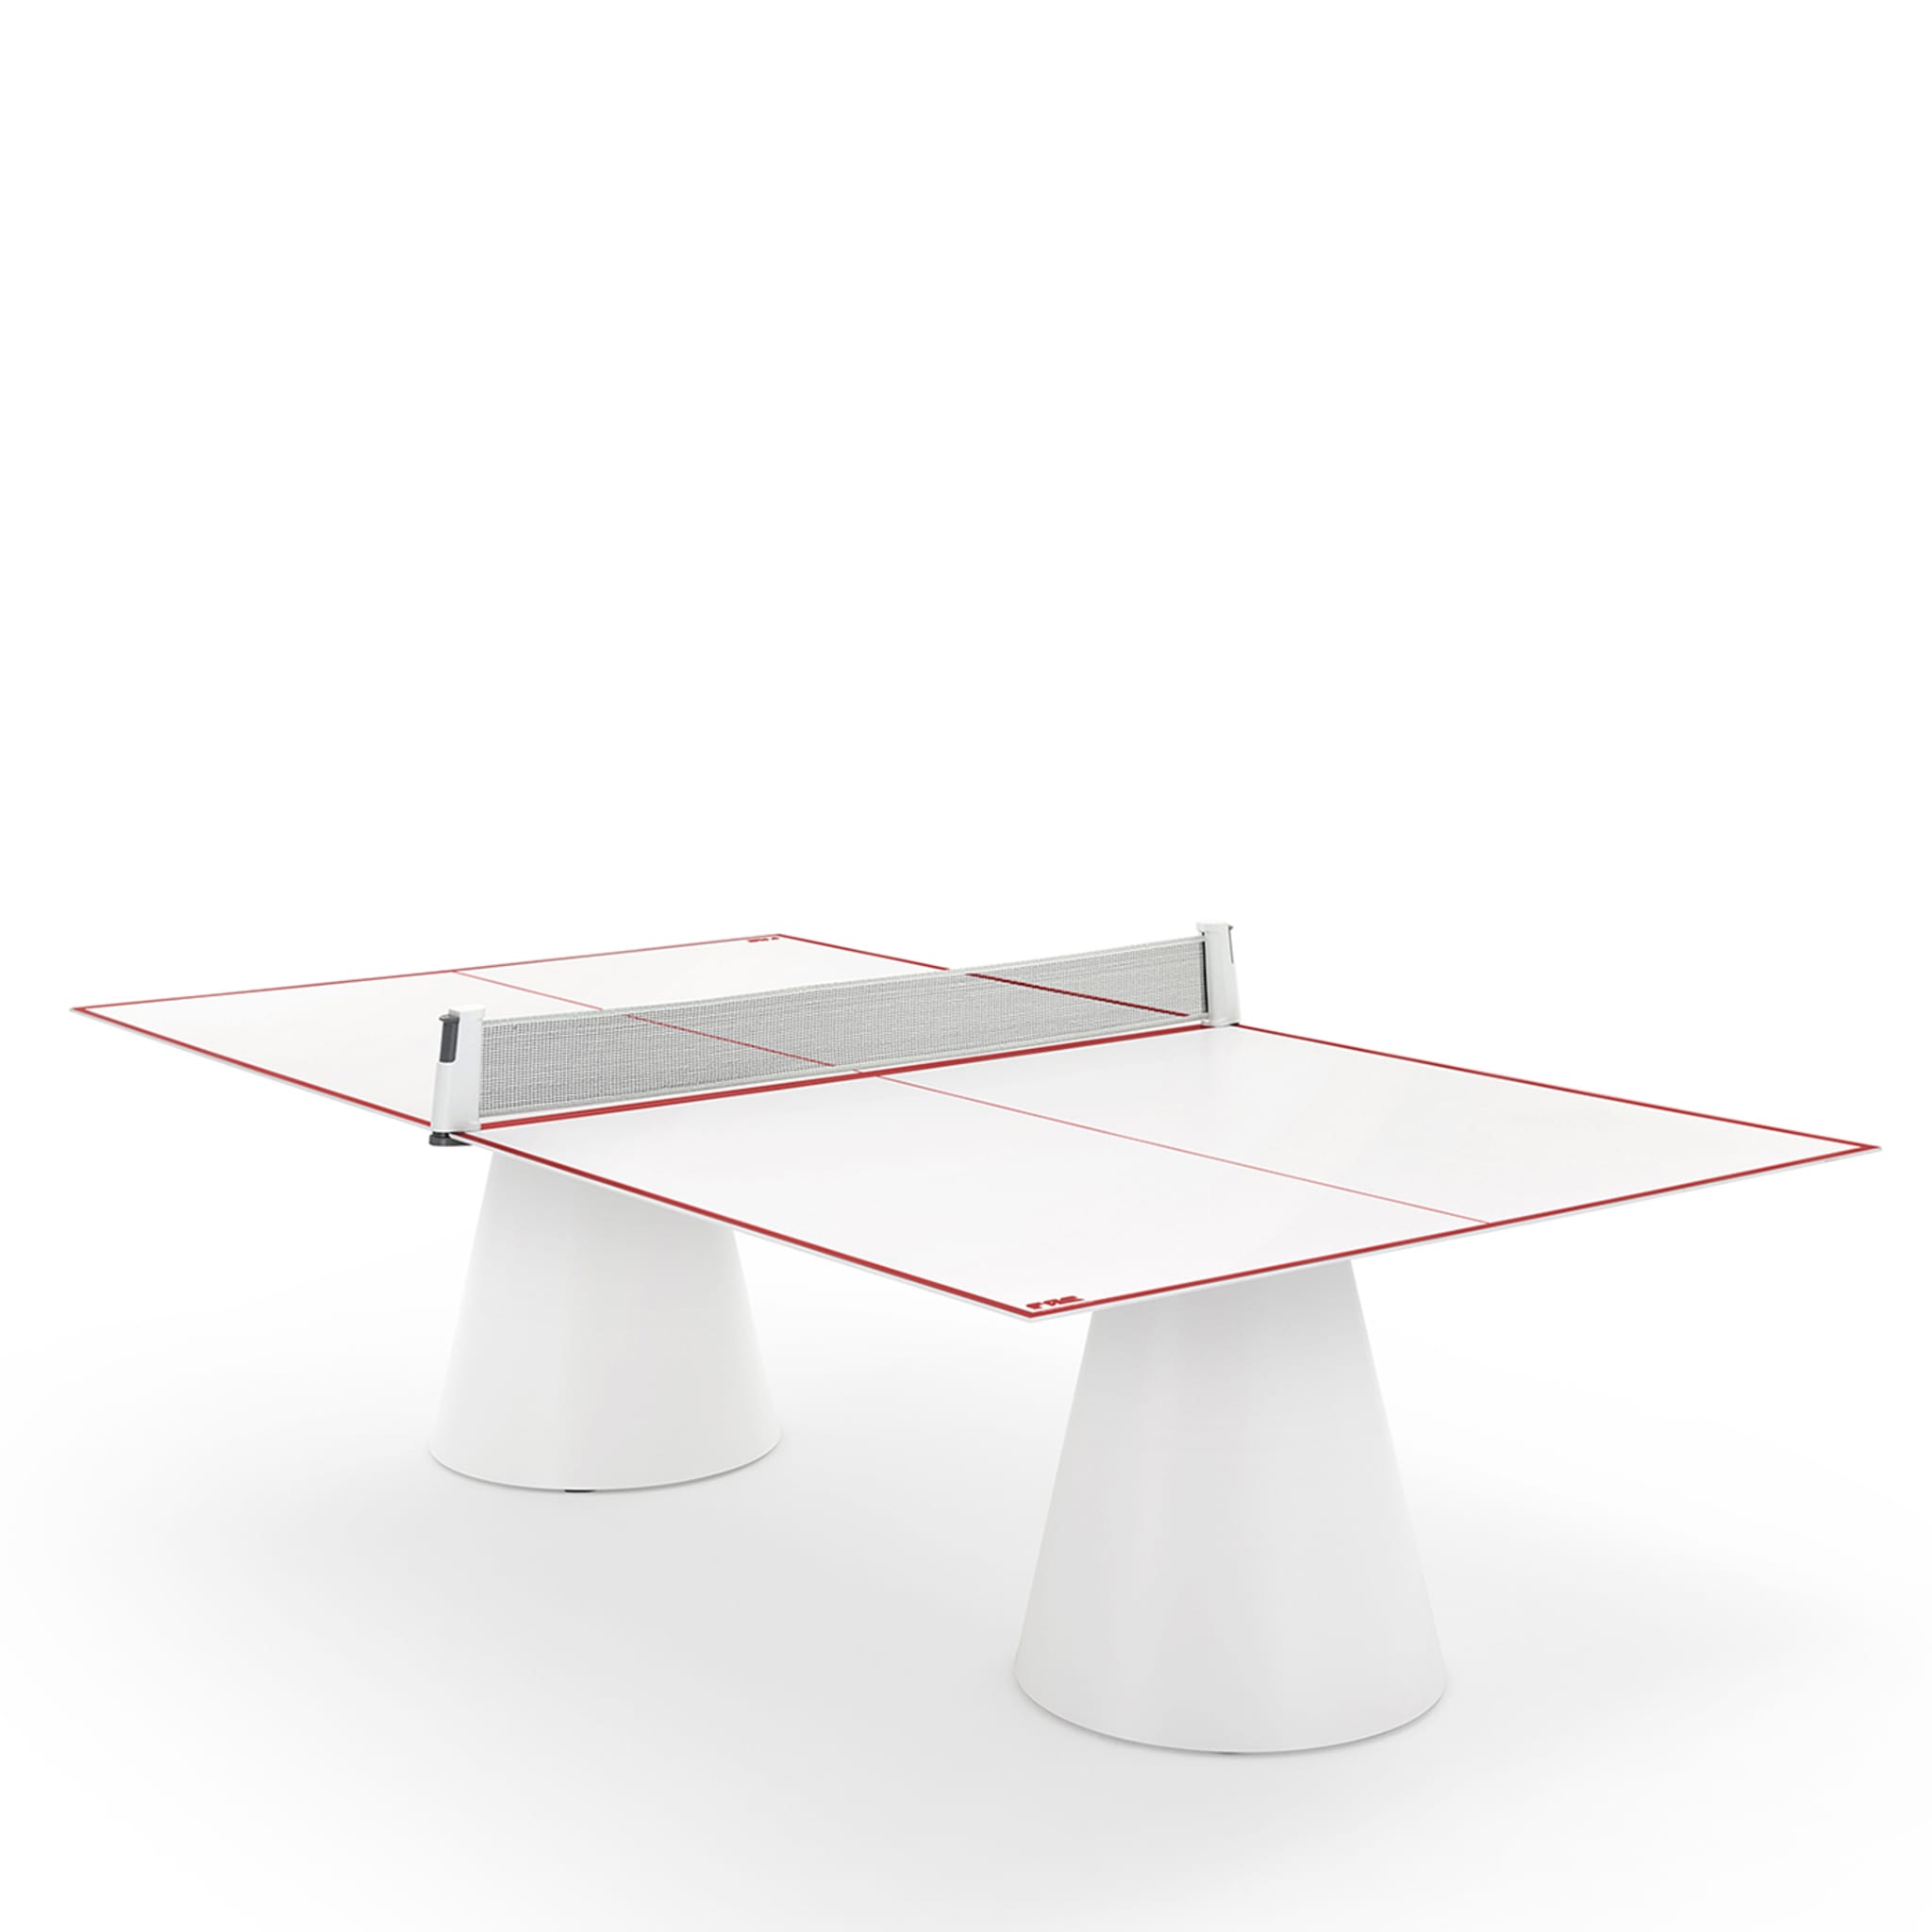 Dada Outdoor White Ping Pong Table by Basaglia + Rota Nodari - Alternative view 1